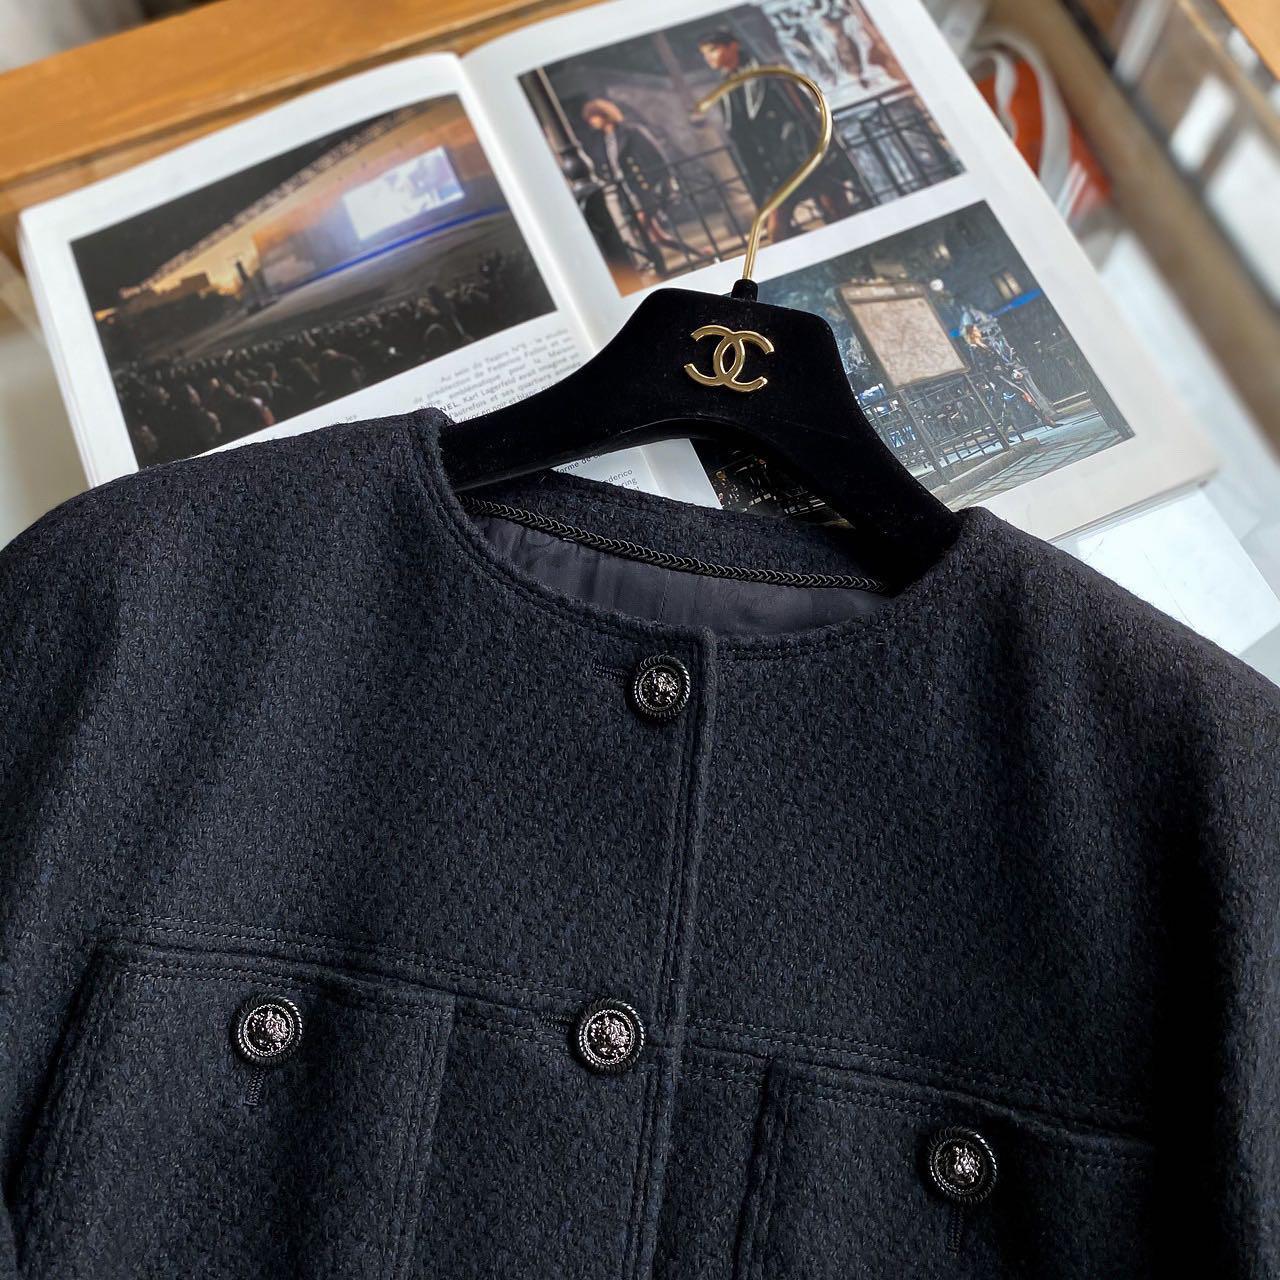 Chanel CC Buttons Paris / Edinburgh Tweed Coat In Excellent Condition For Sale In Dubai, AE